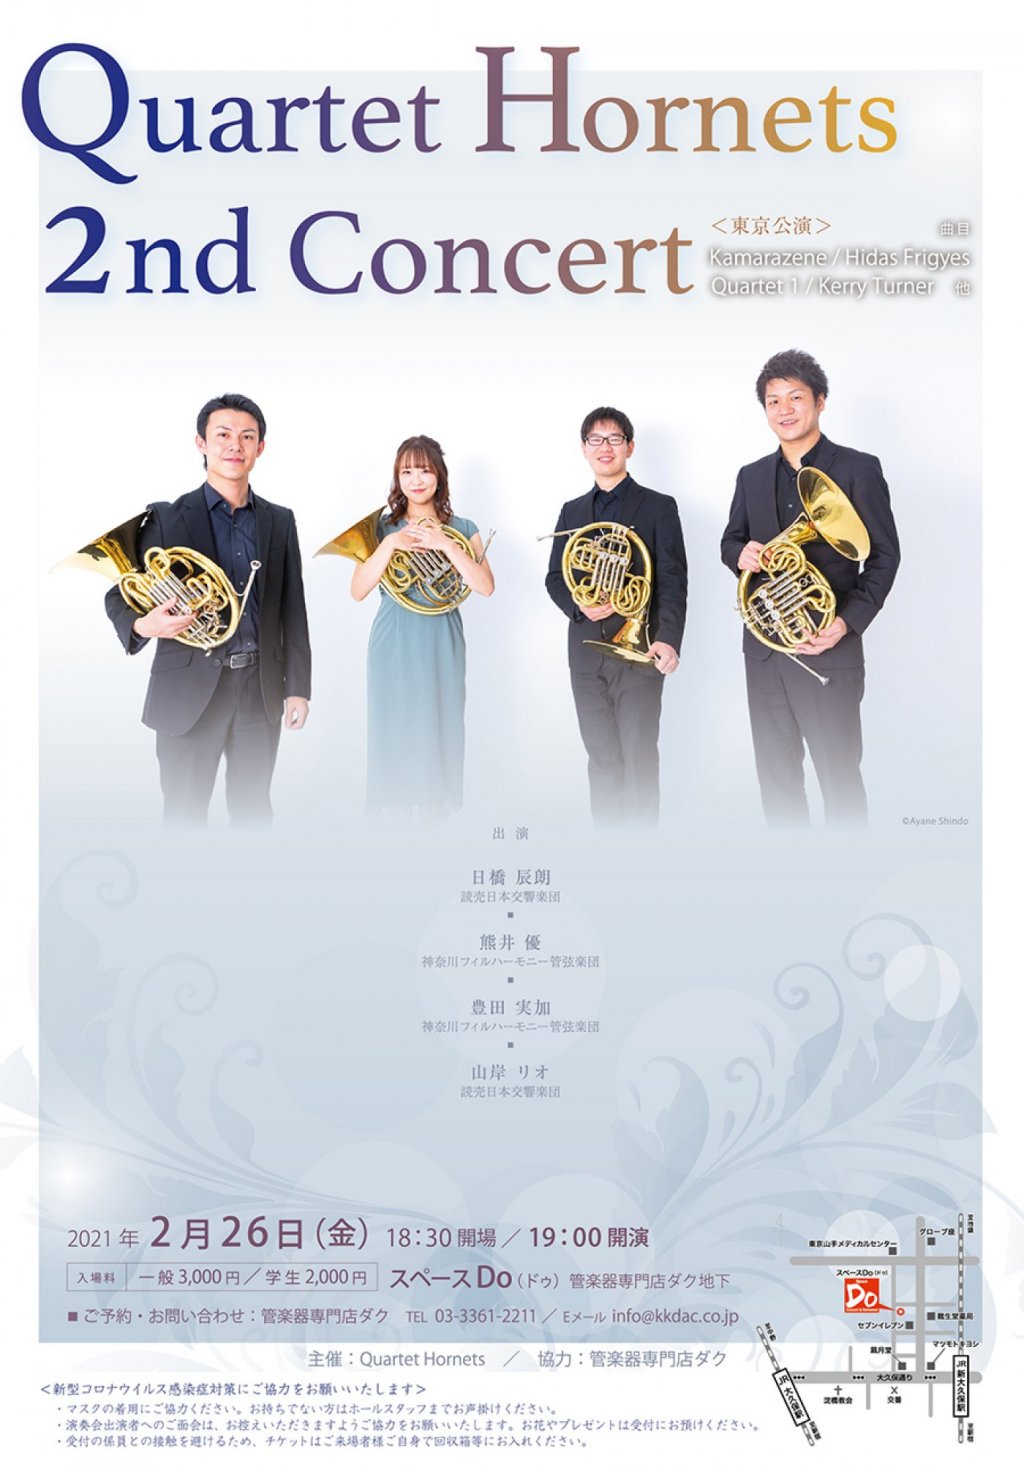 Quartet Hornets 2nd Concert